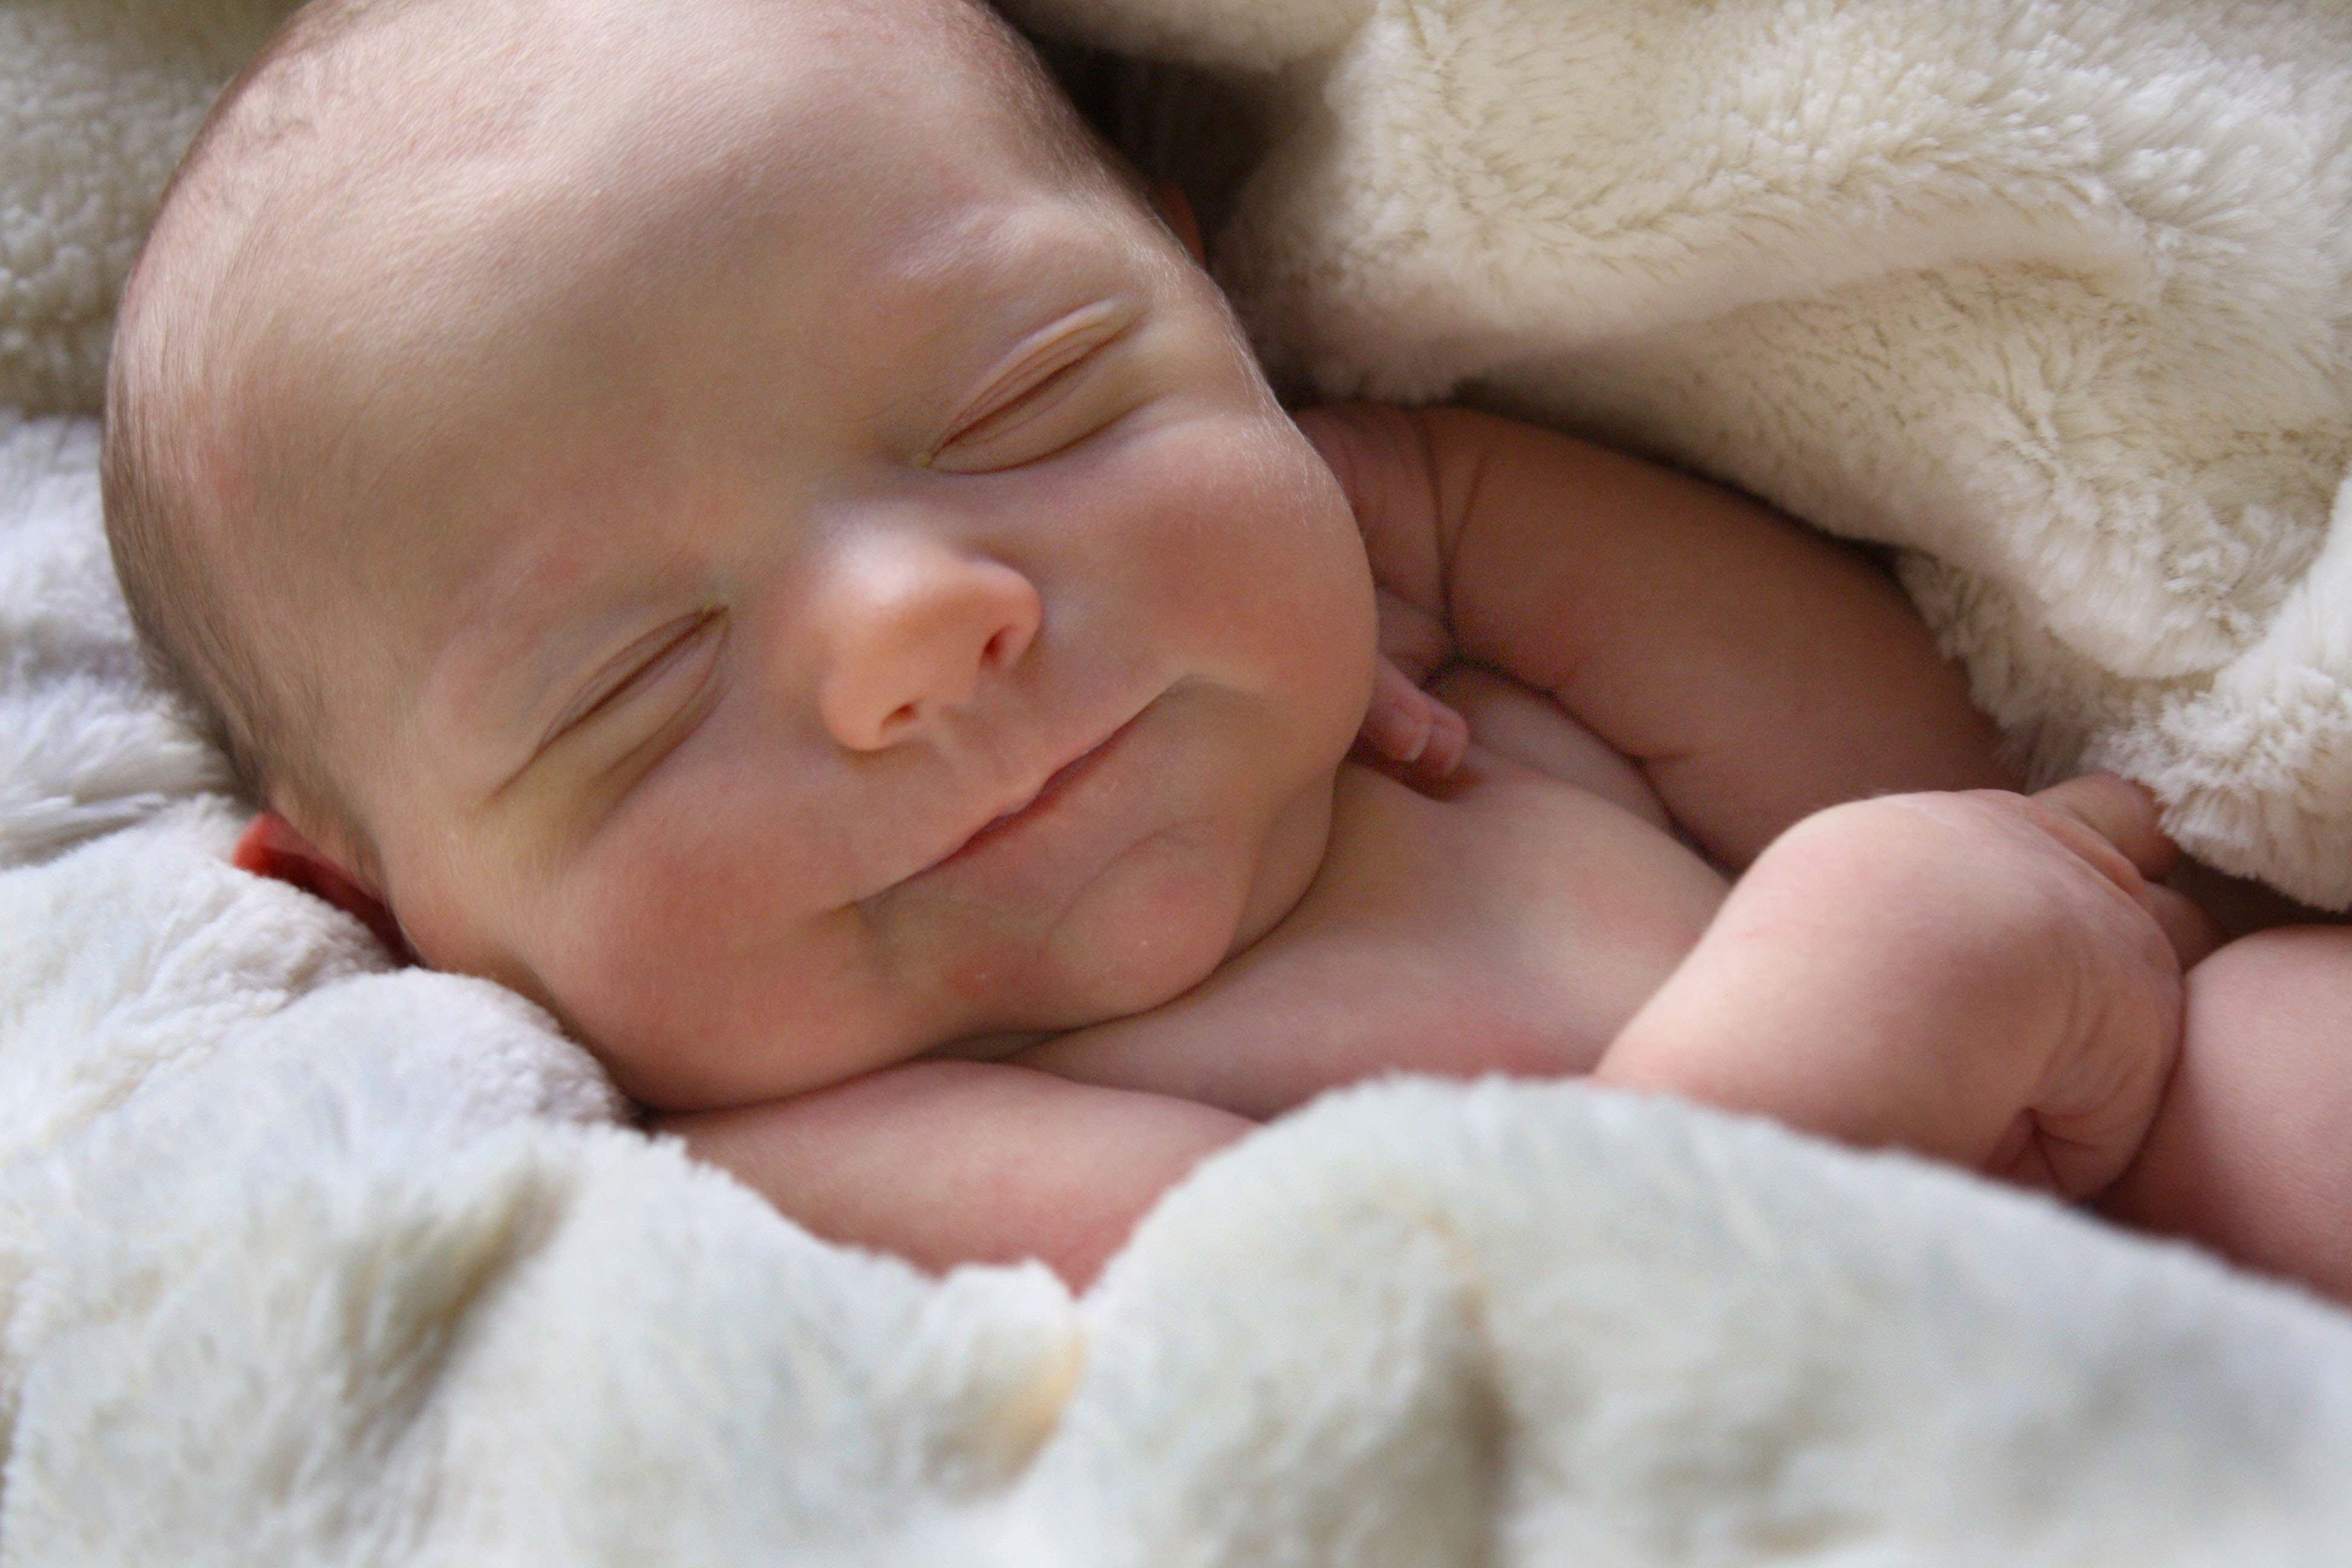 صور اطفال مولوده كيوت 2014 , اجمل صور الاطفال 2014